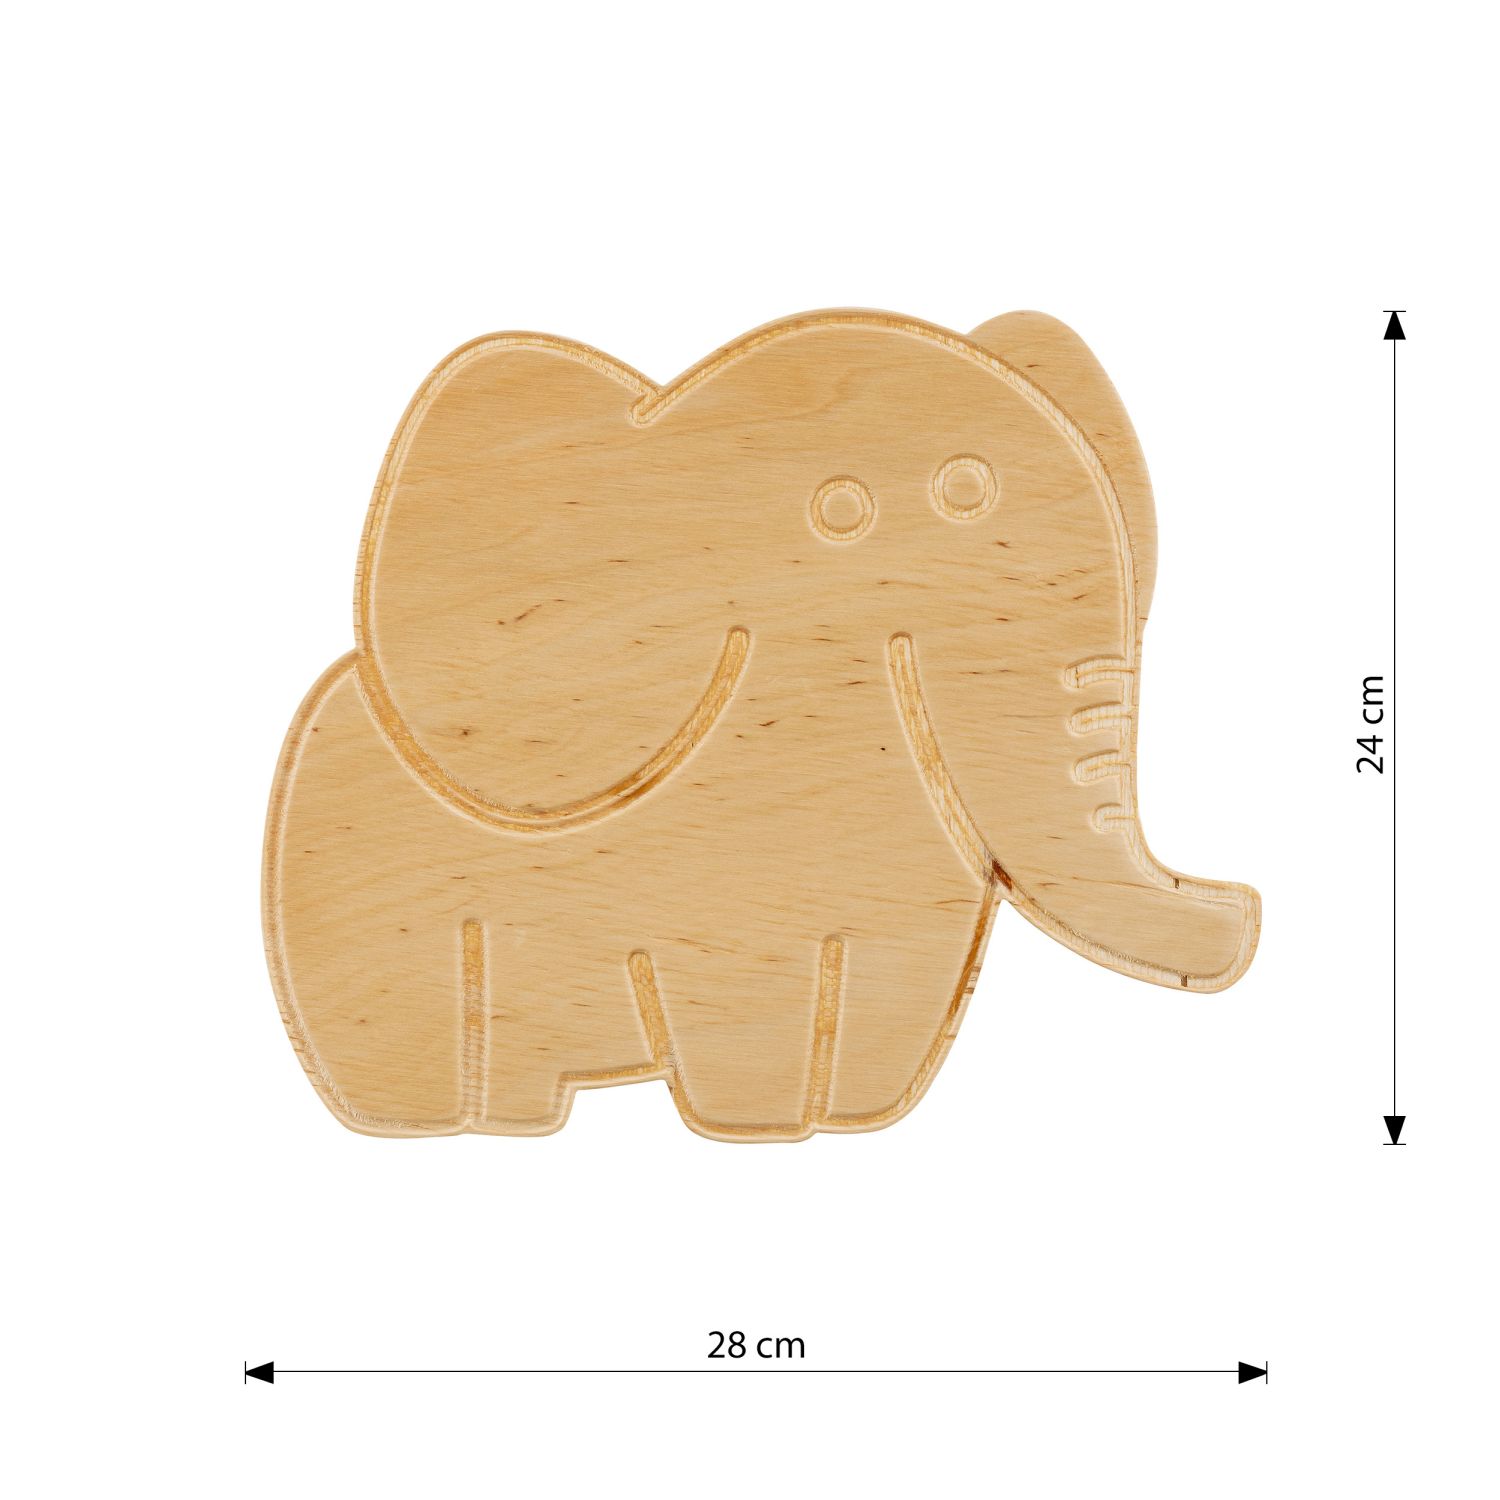 Wandlampe Kinderzimmer Holz mit Stecker Schalter Elefant E14